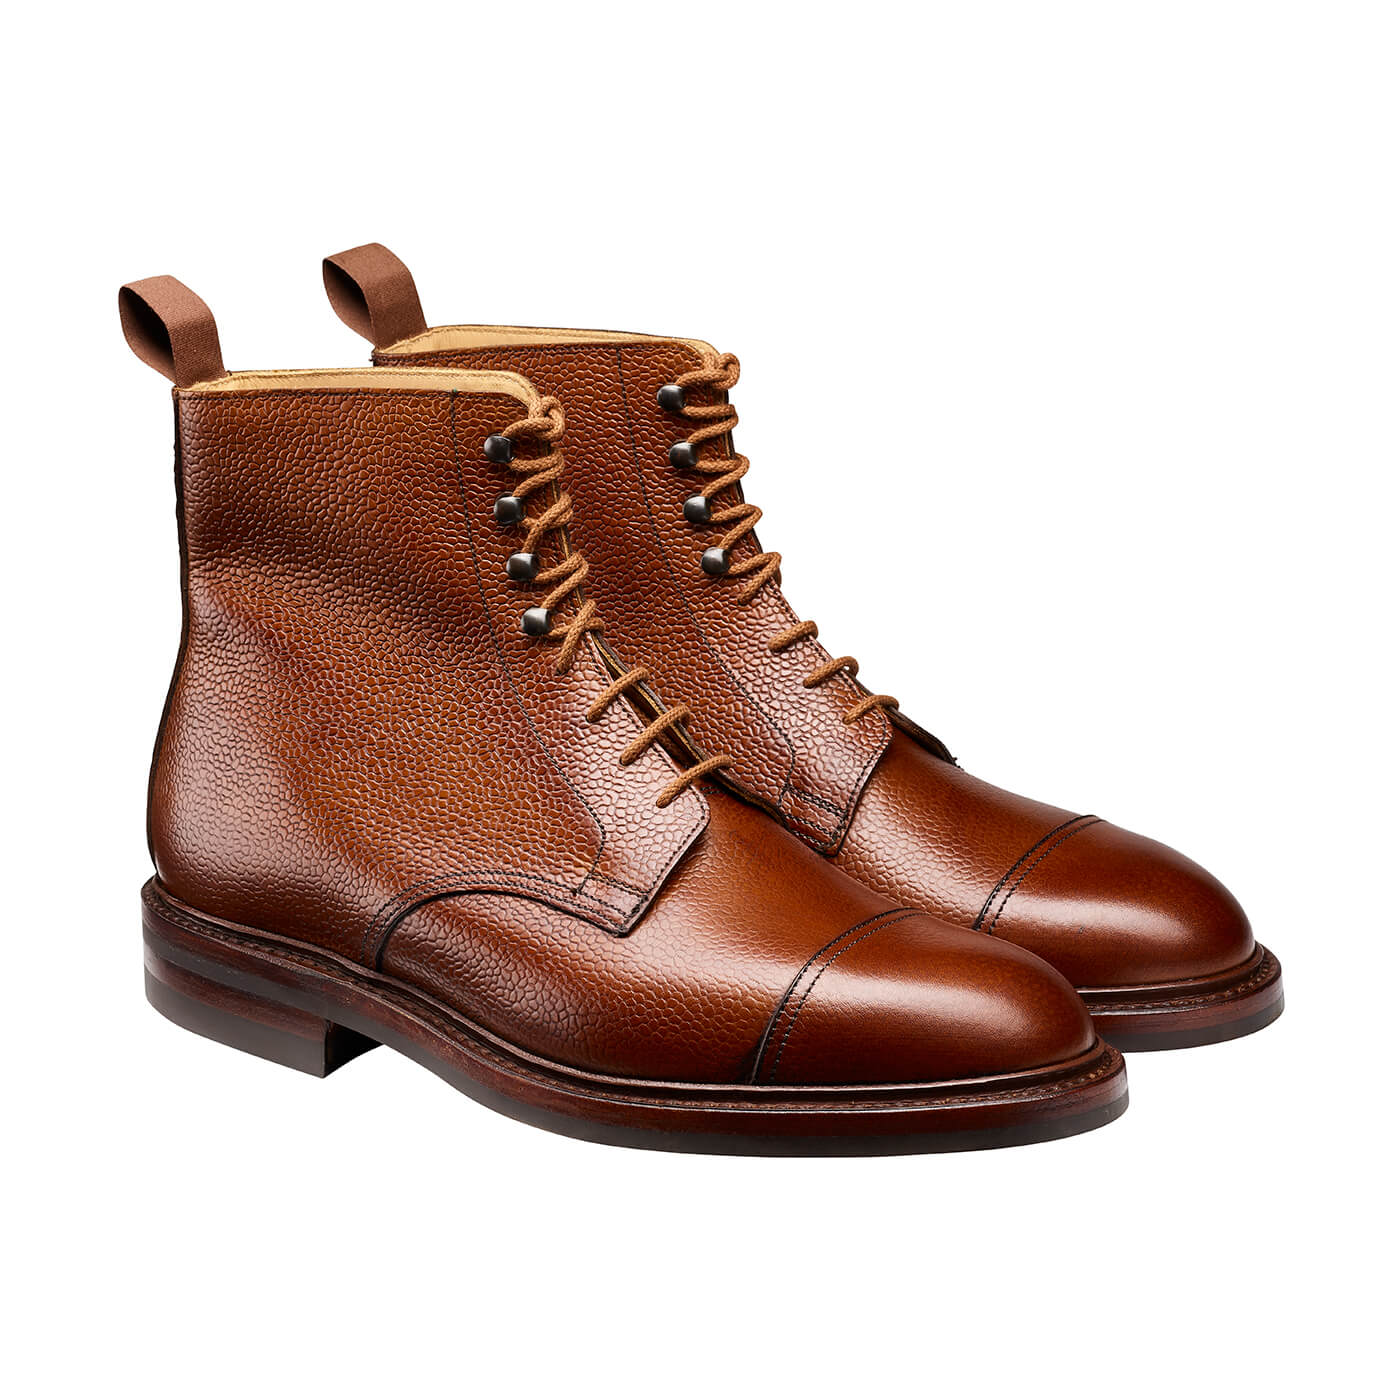 Coniston, tan scotch grain boot made in leather, branded Crockett & Jones